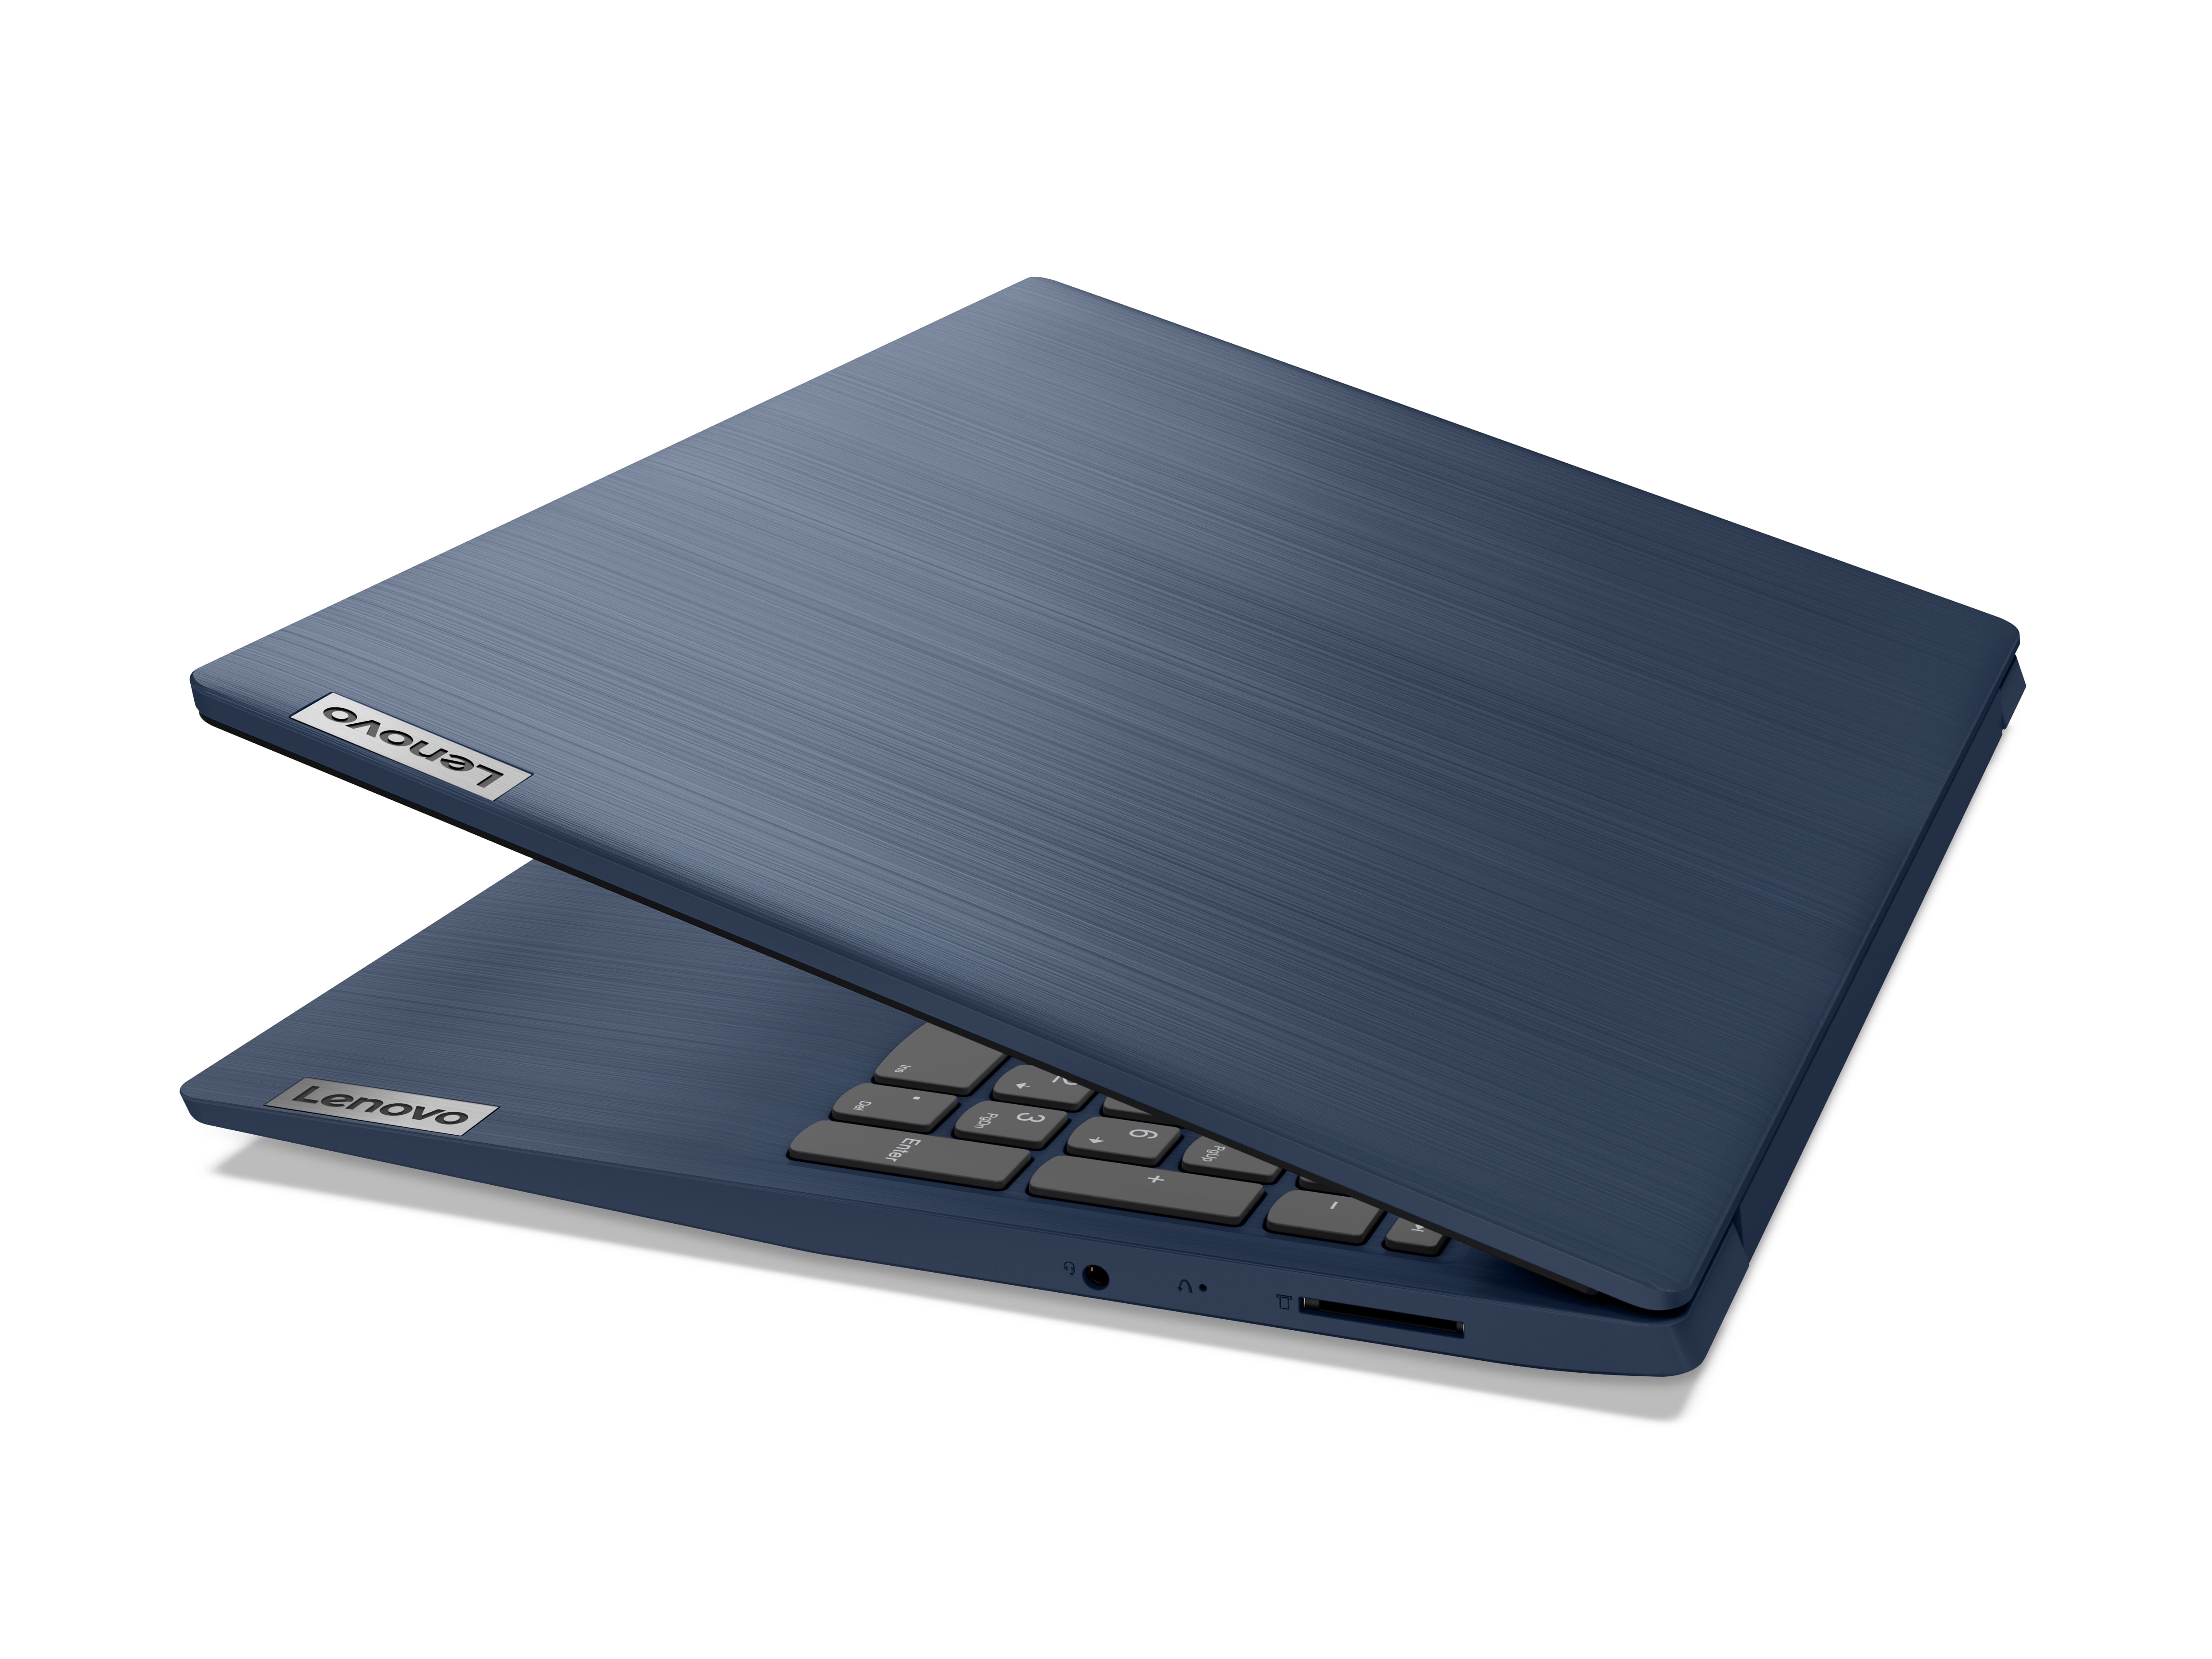 Lenovo IdeaPad 3 15 Laptop, Intel Core i3-1005G1 Dual-Core Processor, 8GB  Memory, 256GB Solid State Drive, Windows 10S - Abyss Blue - 81WE008HUS  (Google Classroom Compatible) 